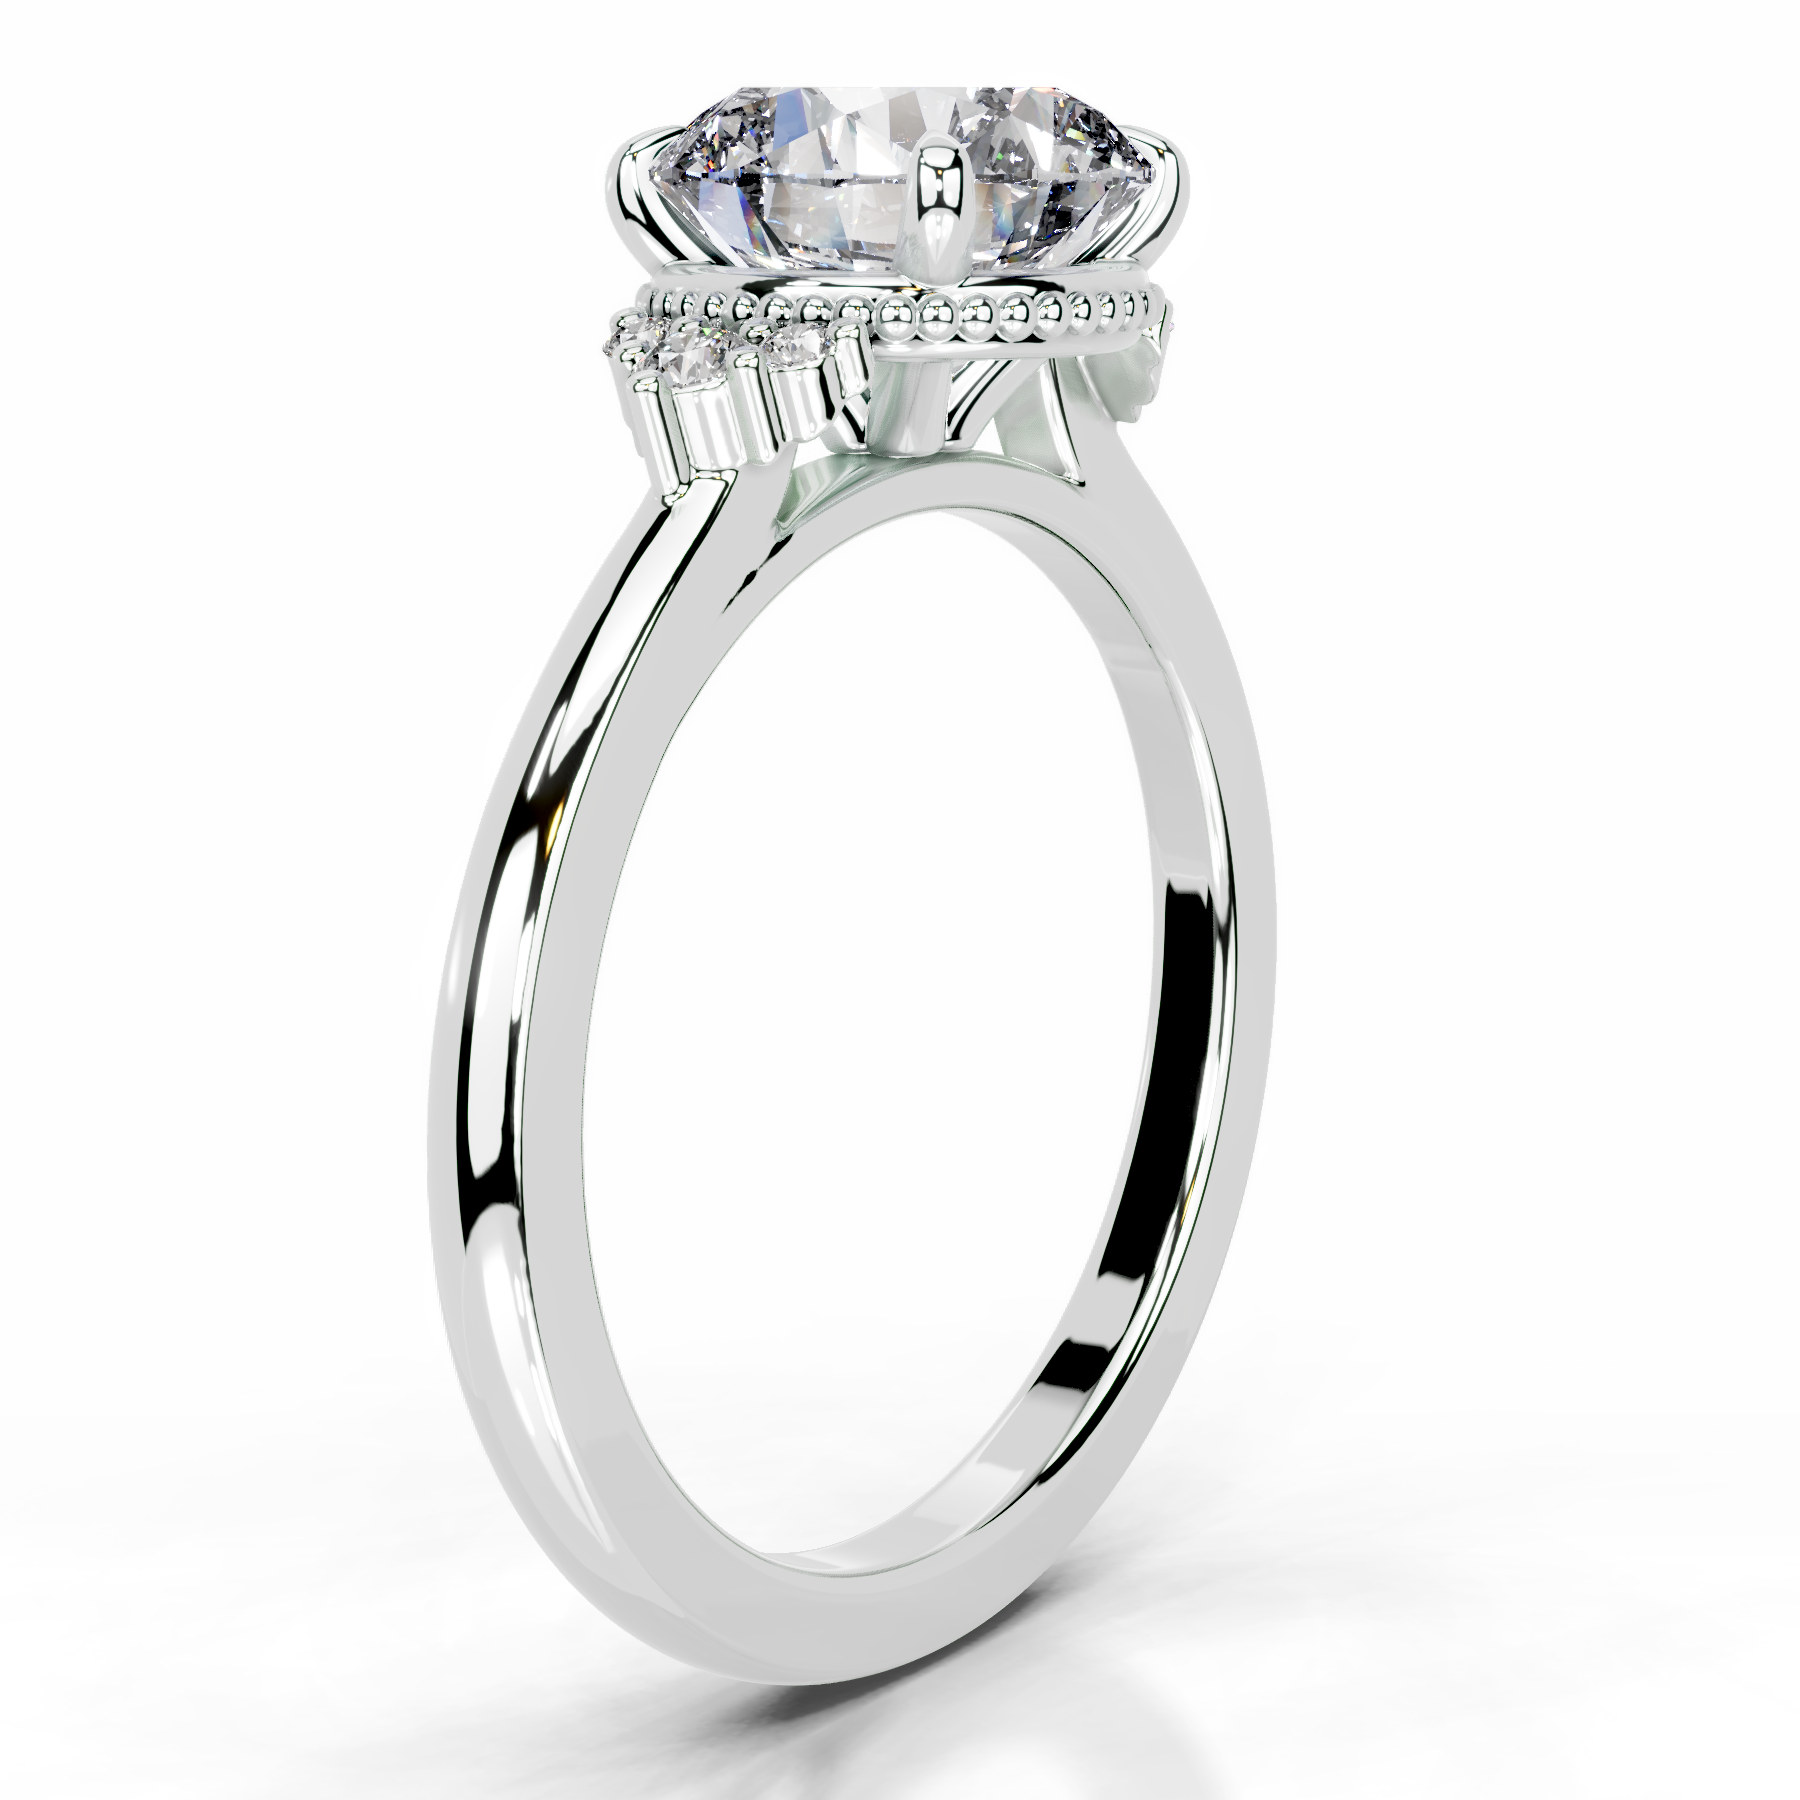 Natasha Diamond Engagement Ring   (2.10 Carat) -14K White Gold